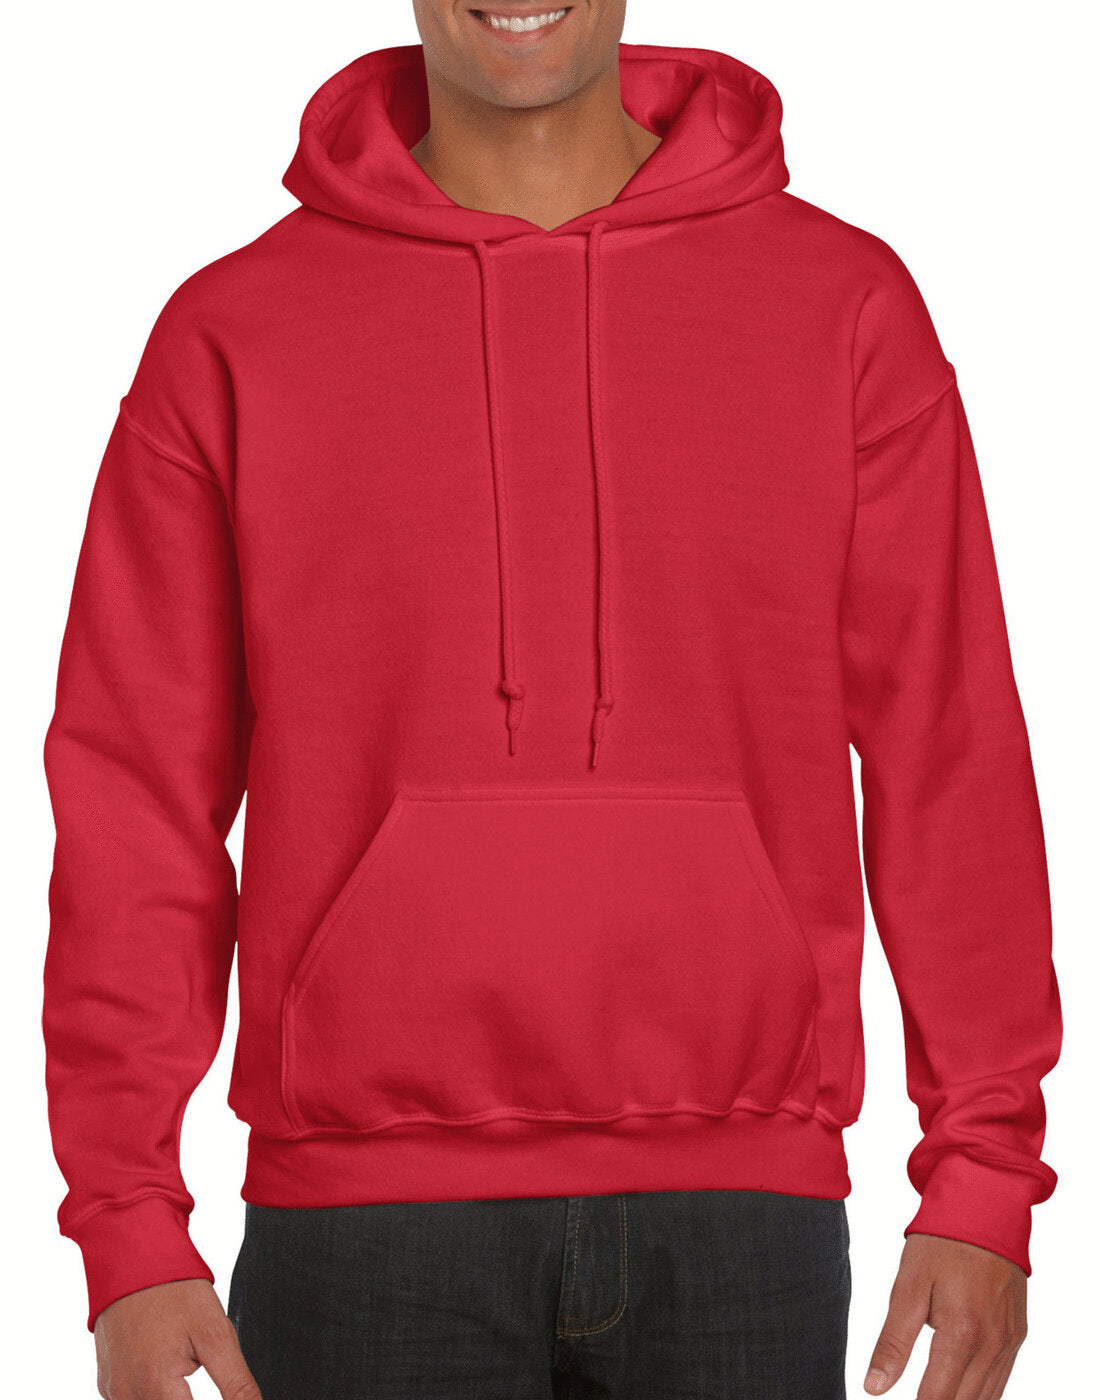 Gildan Dryblend Adult Hooded Sweatshirt - Red